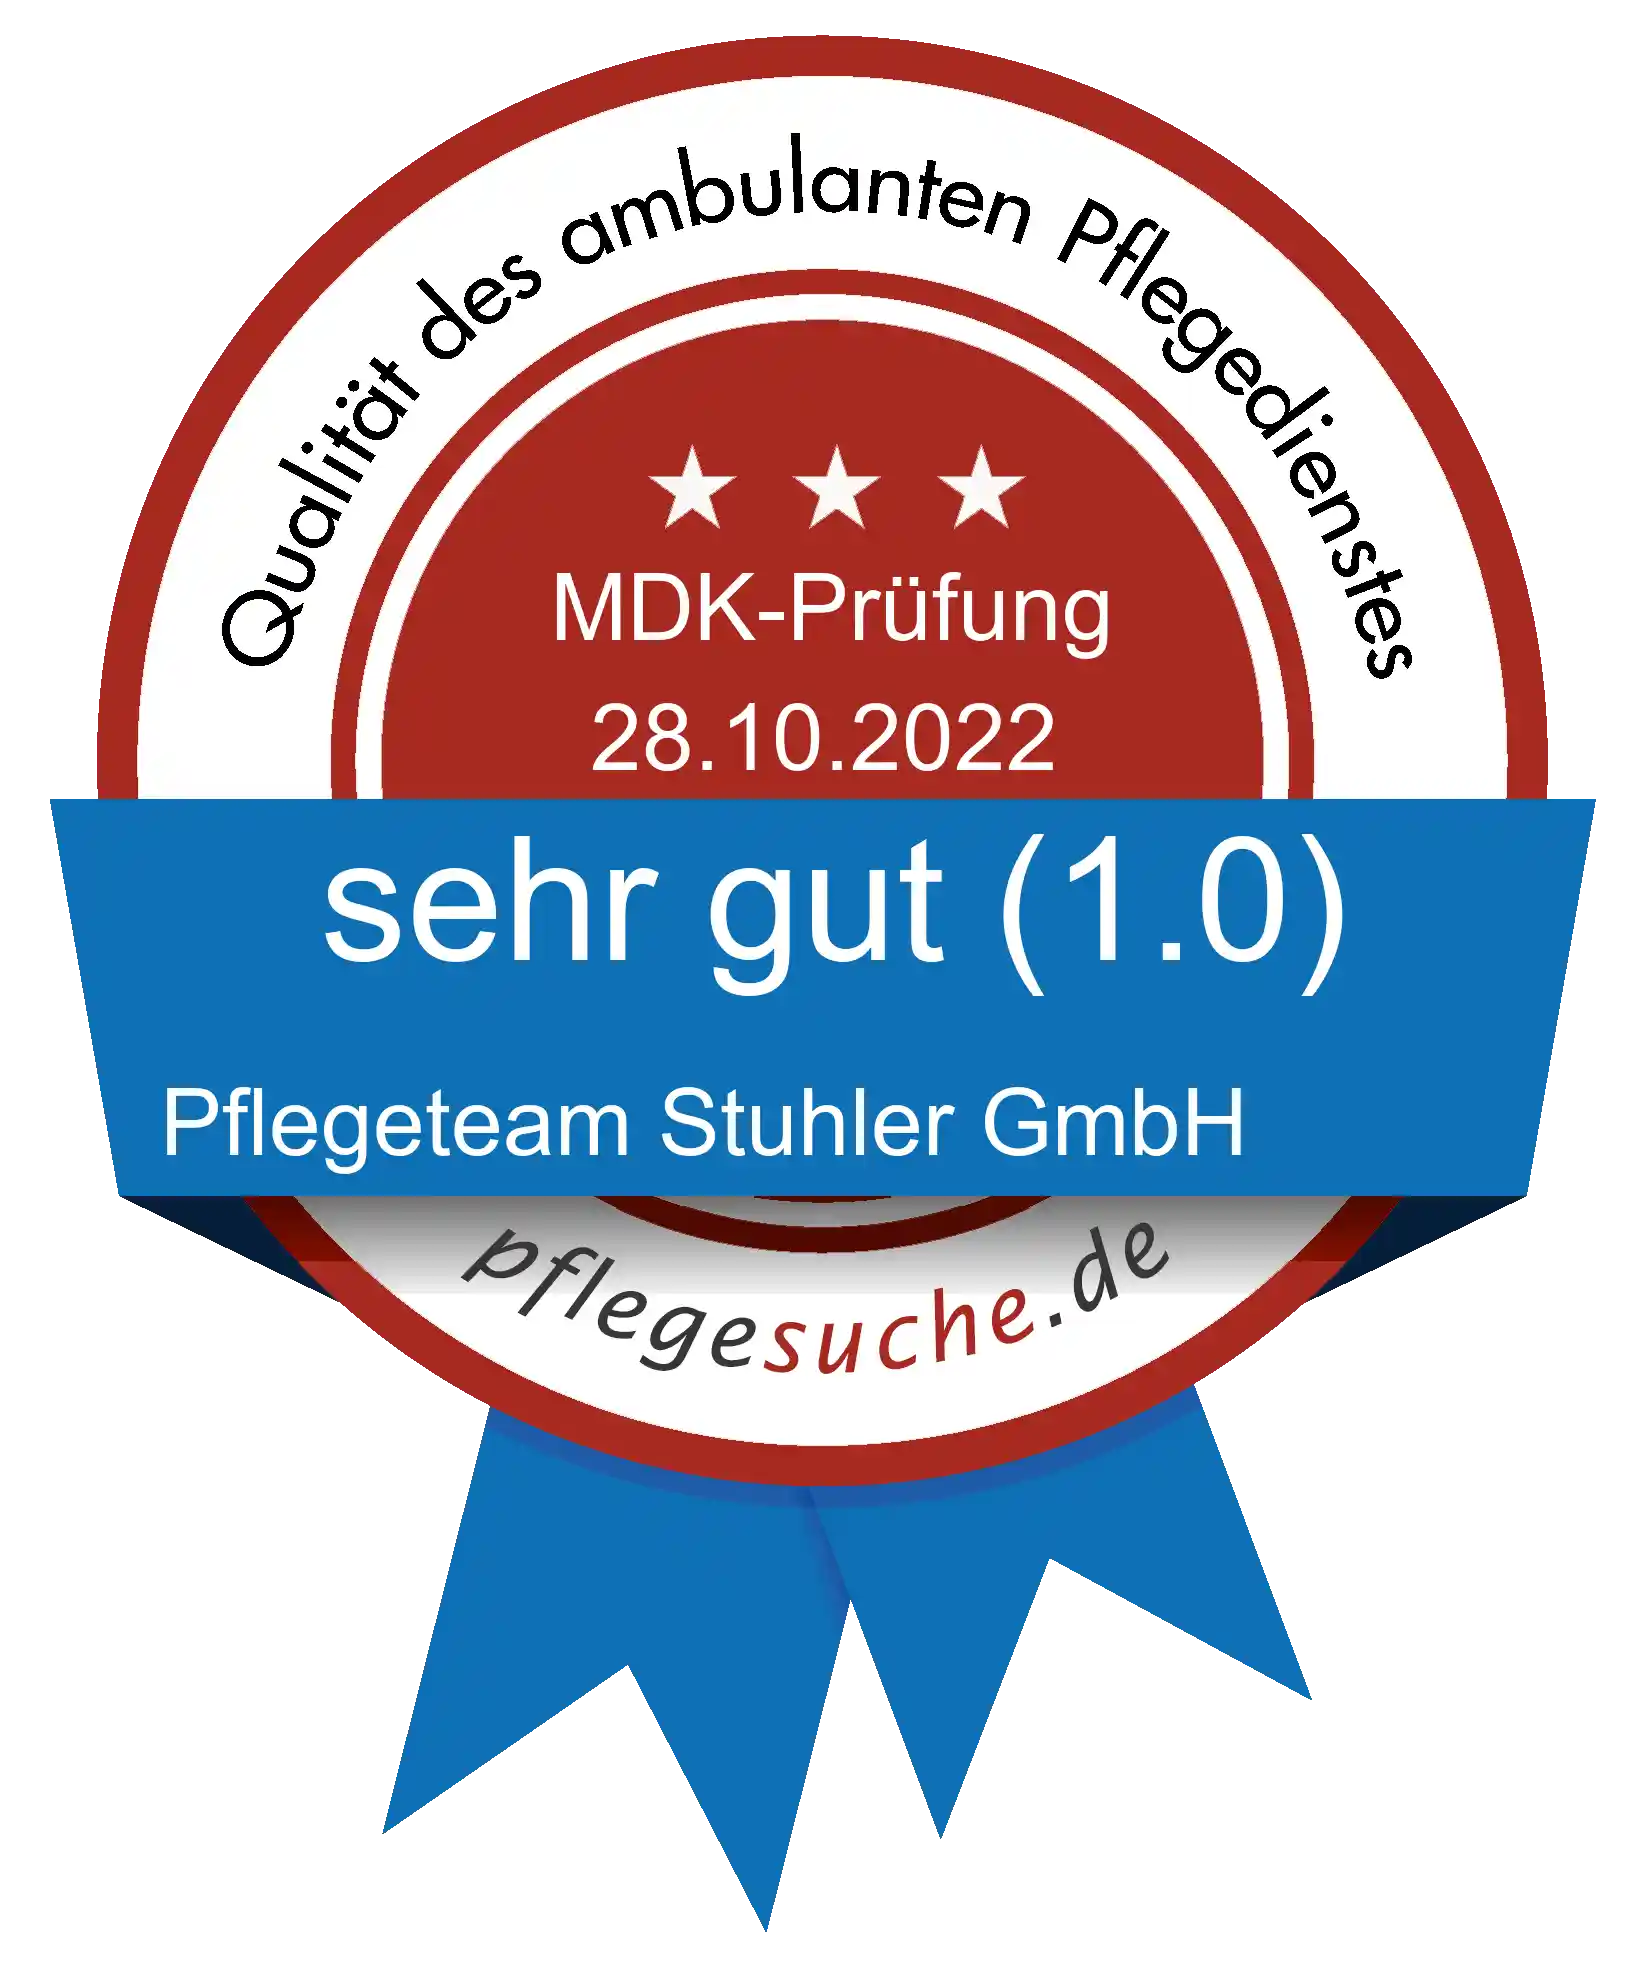 Siegel Benotung: Pflegeteam Stuhler GmbH